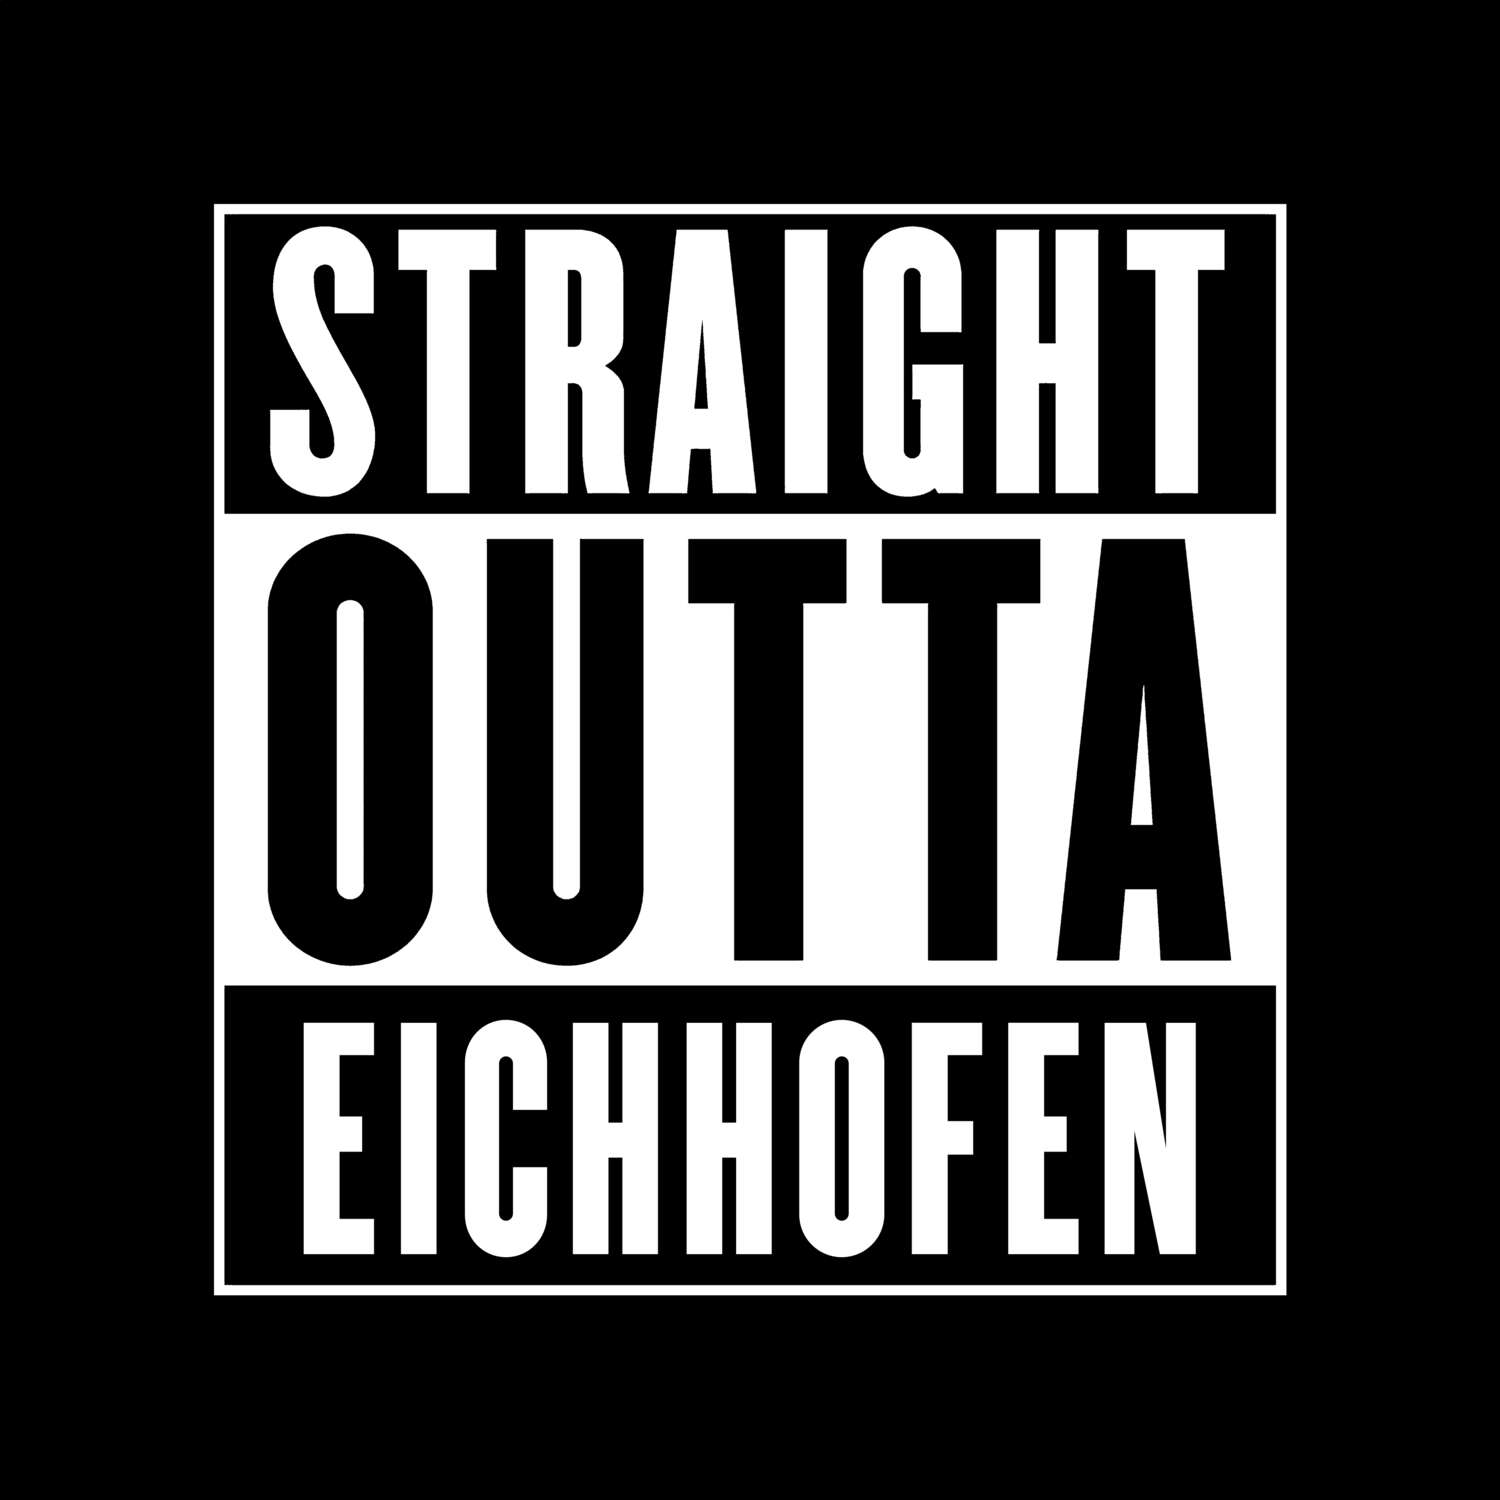 Eichhofen T-Shirt »Straight Outta«